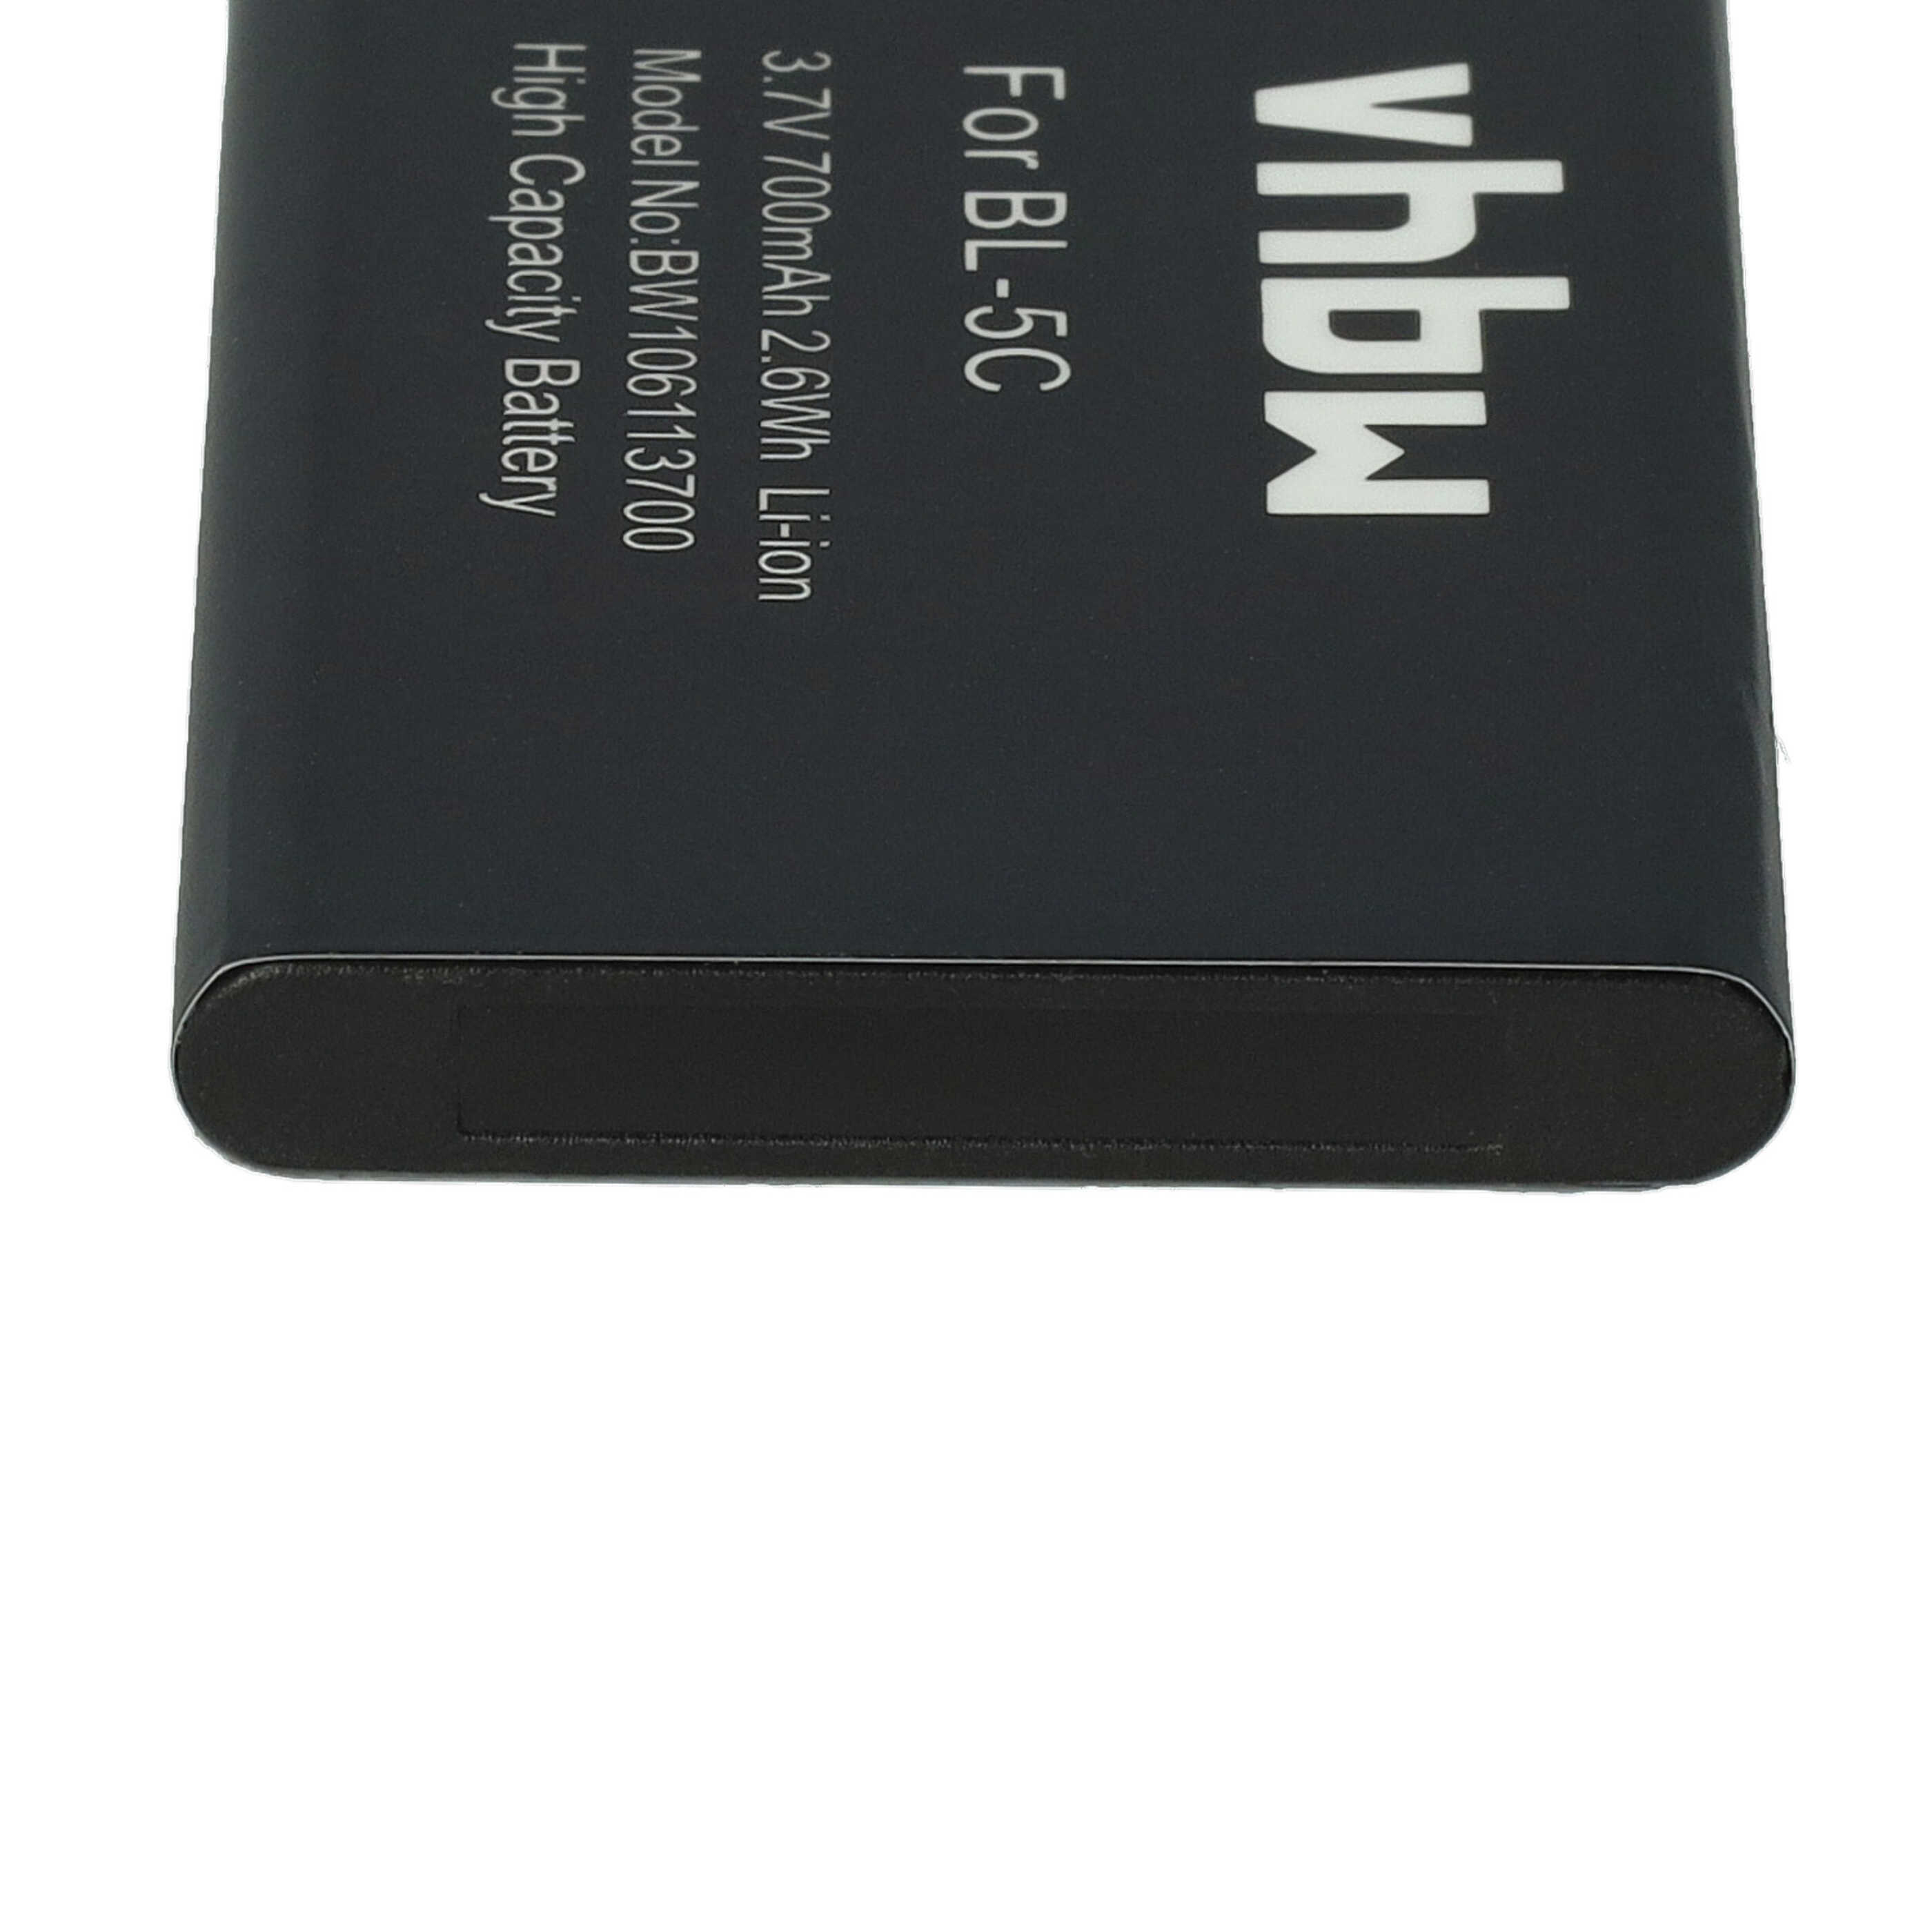 Batería reemplaza HX-N3650A, BA-01, HXE-W01 para receptor GPS Royaltek - 700 mAh 3,7 V Li-Ion